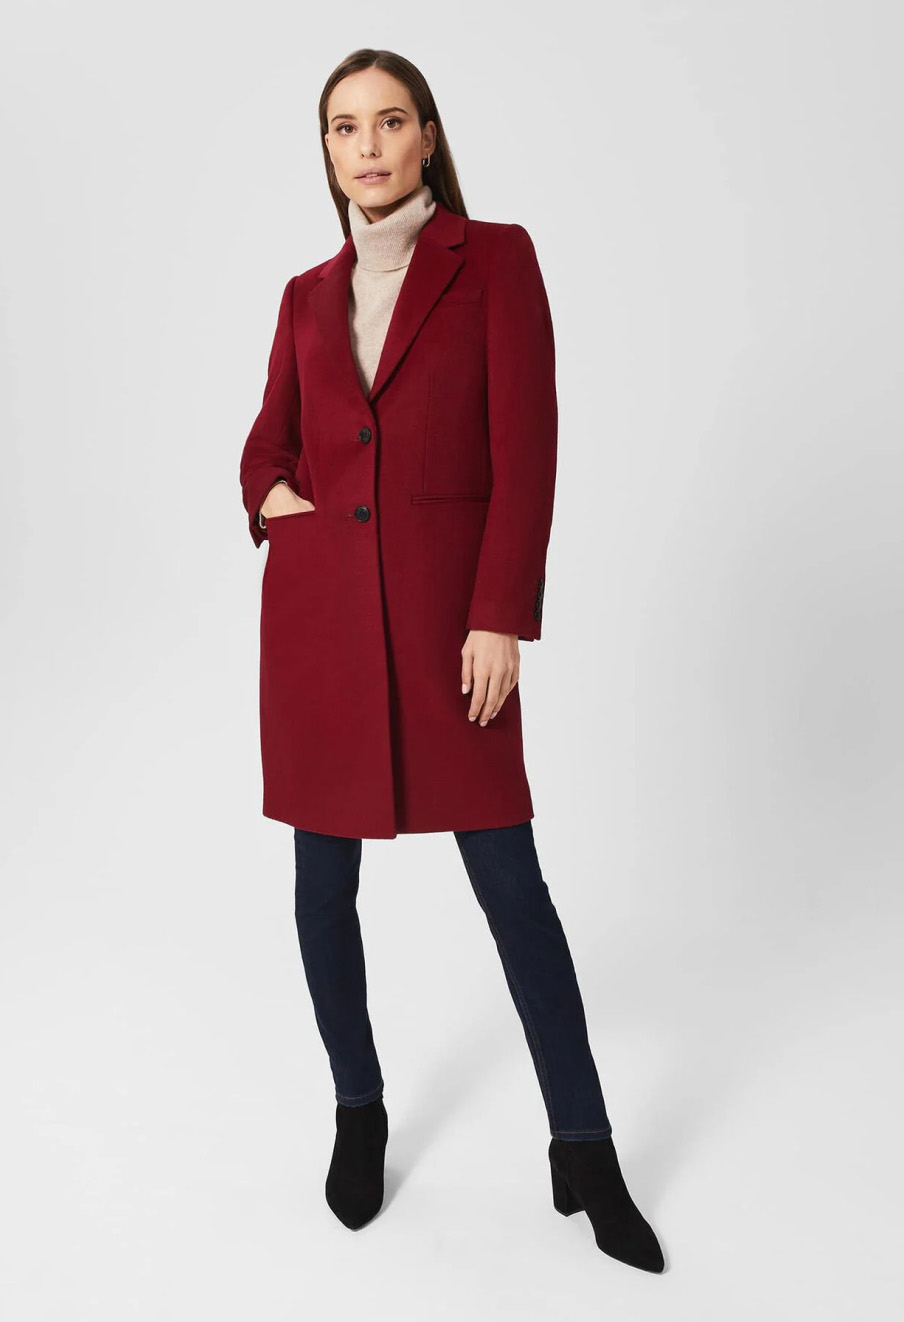 Model wears a Hobbs wool coat in red.